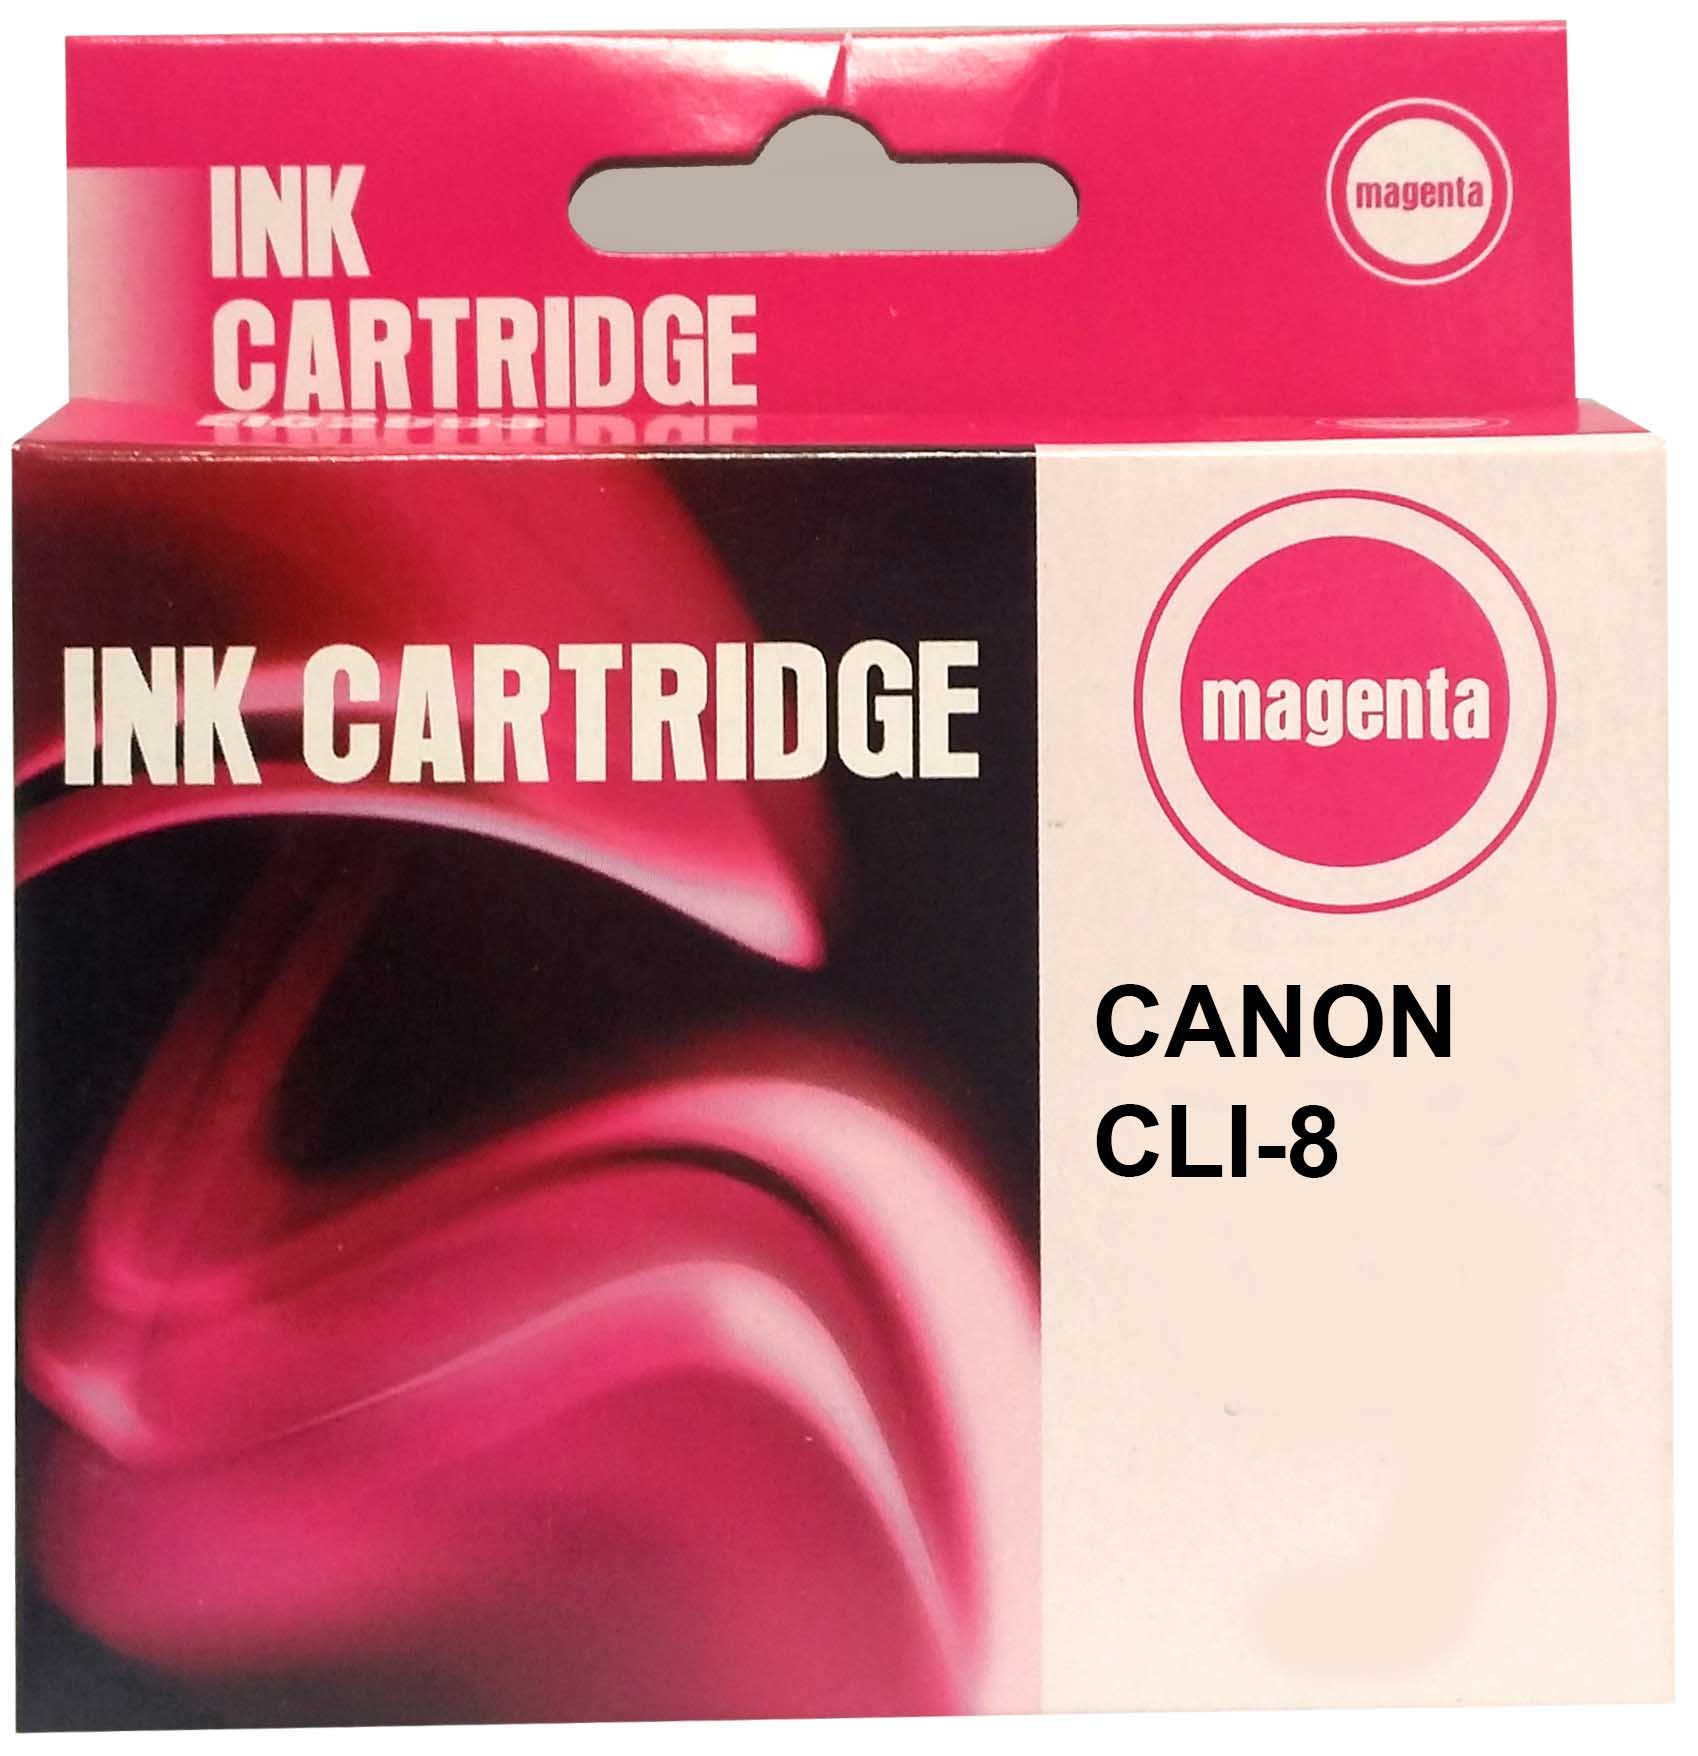 Shop Canon Compatible Ink Cartridges at